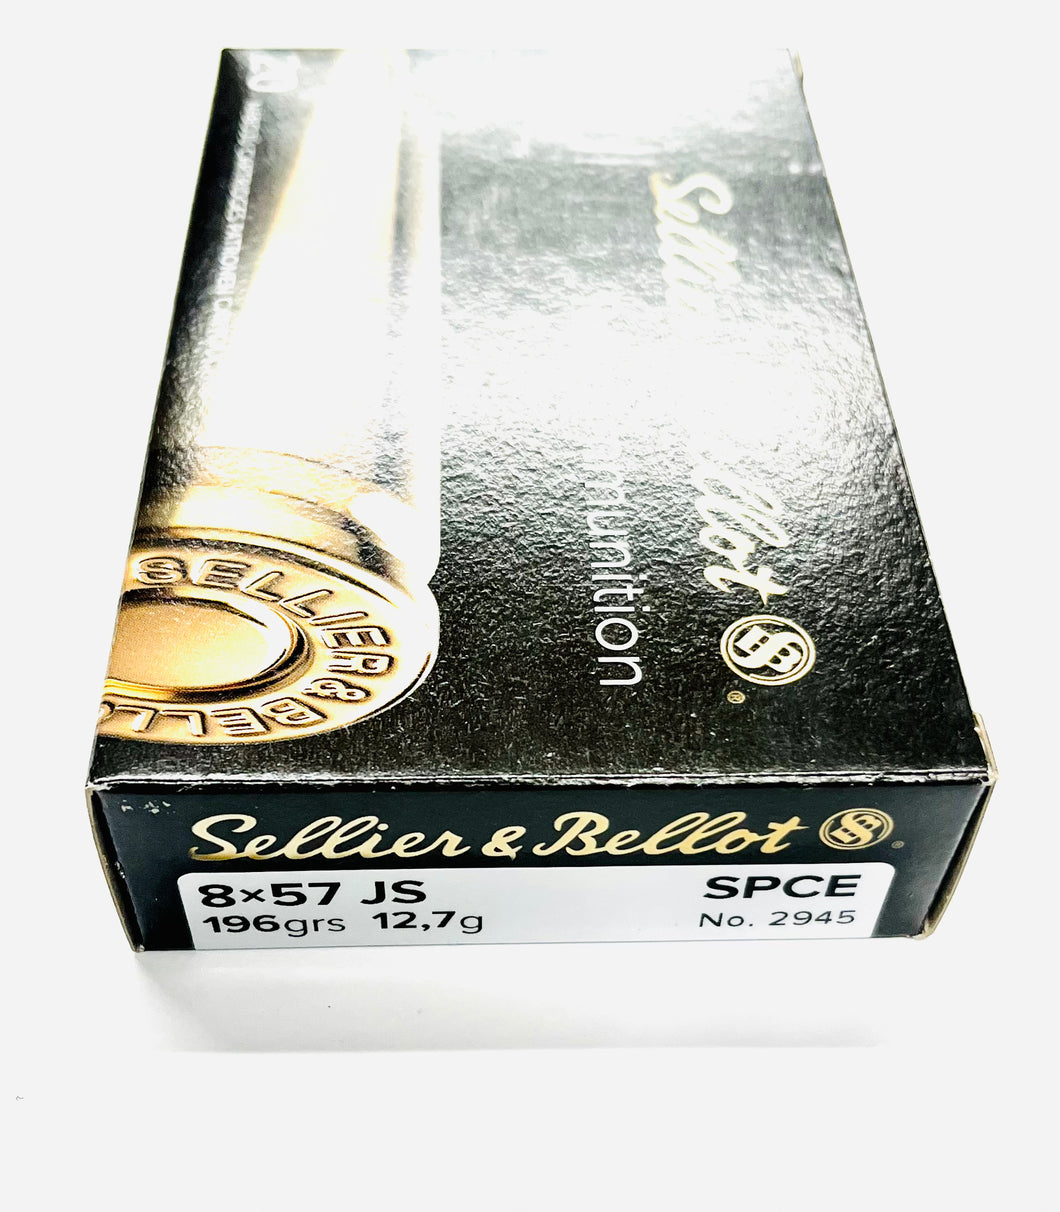 8x57 JS 196gr SPCE Ammunition by S&B (20 pcs)